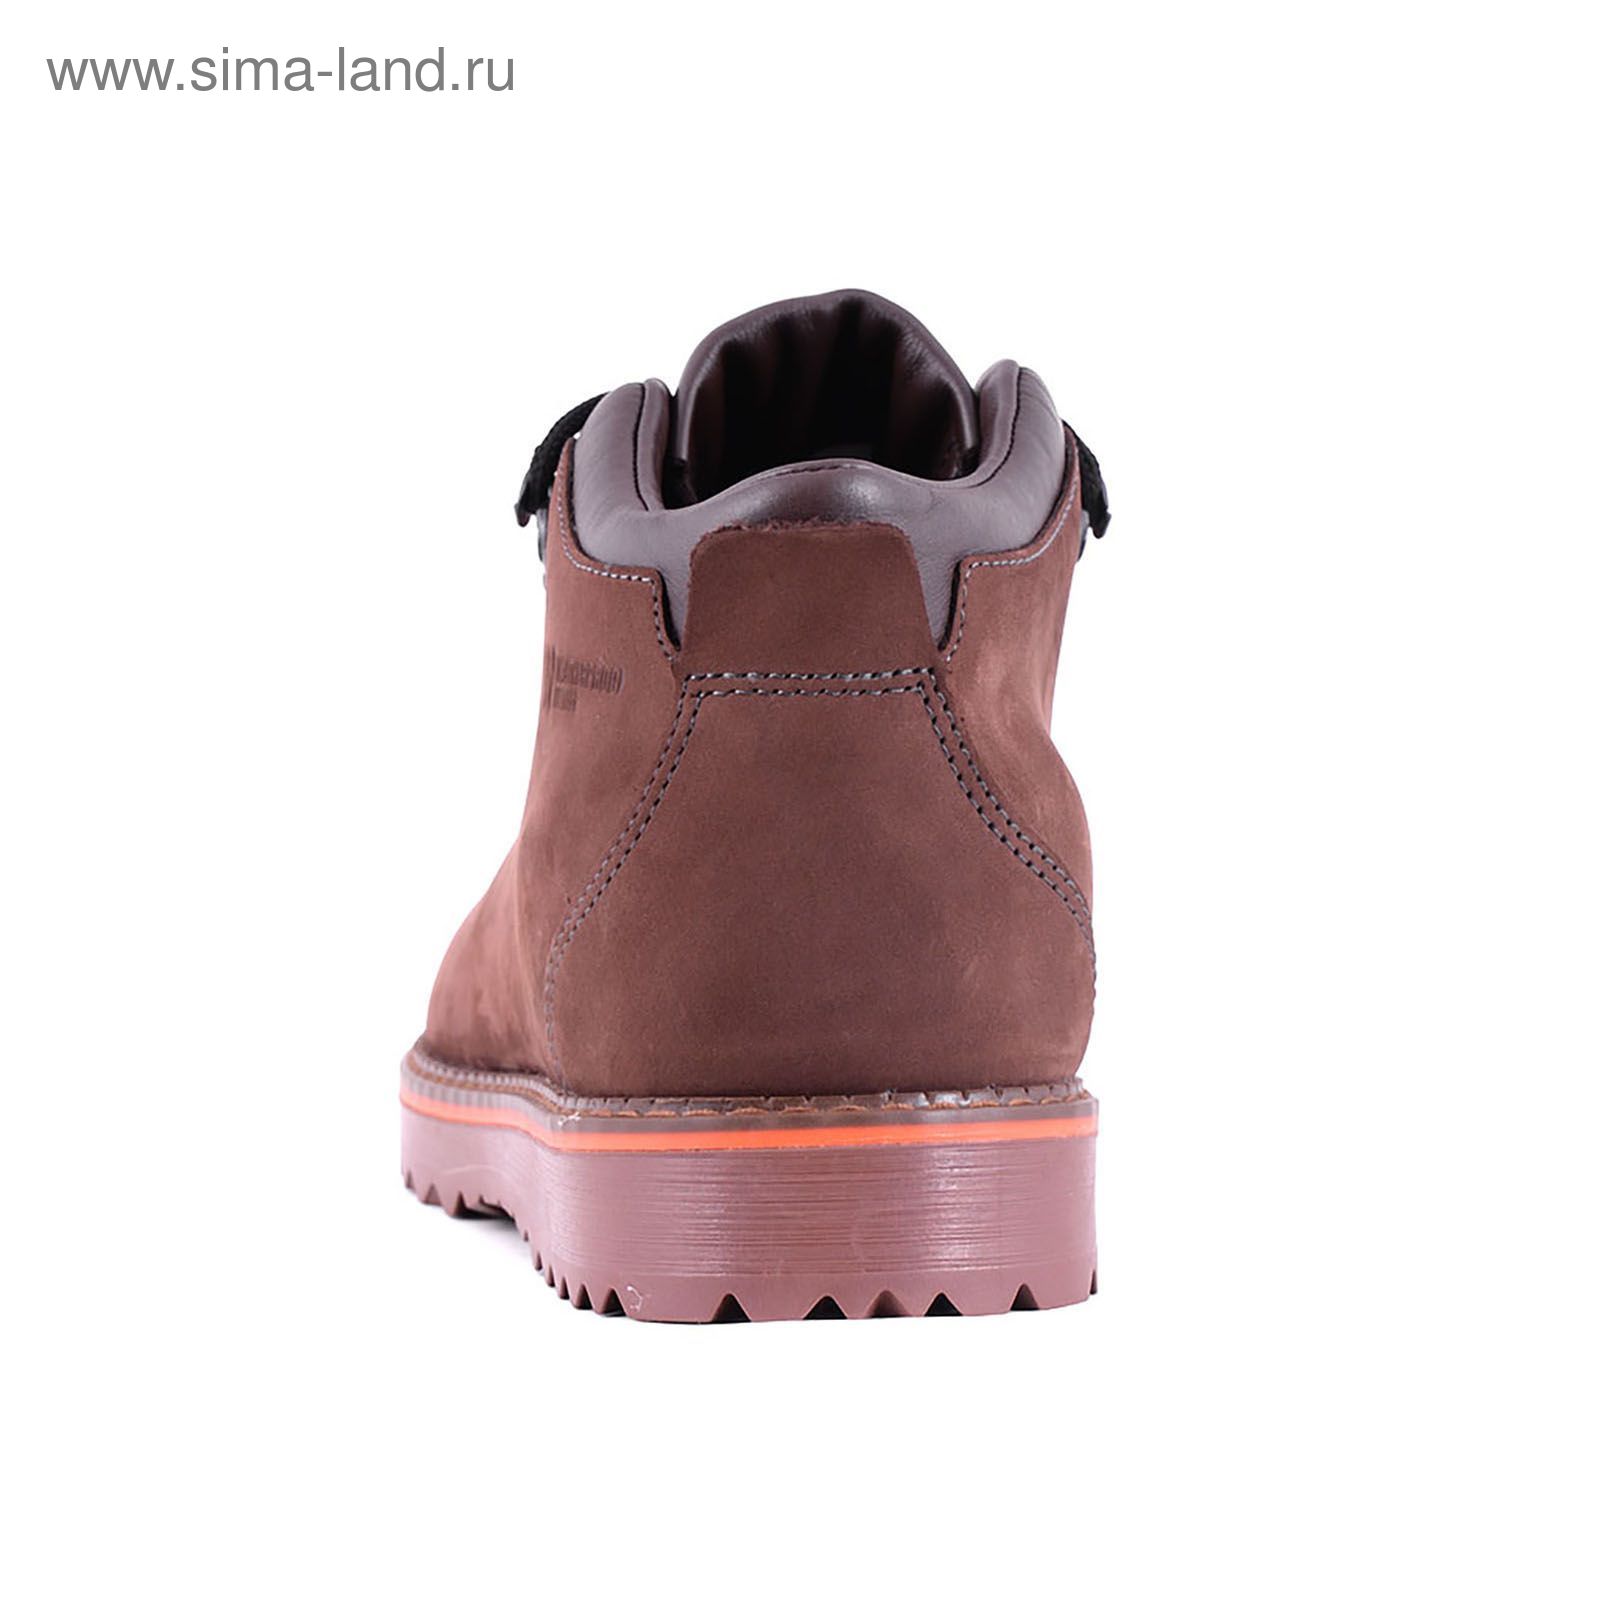 Ботинки TREK Парк 95-36 мех (  коричневый ) (р. 41)